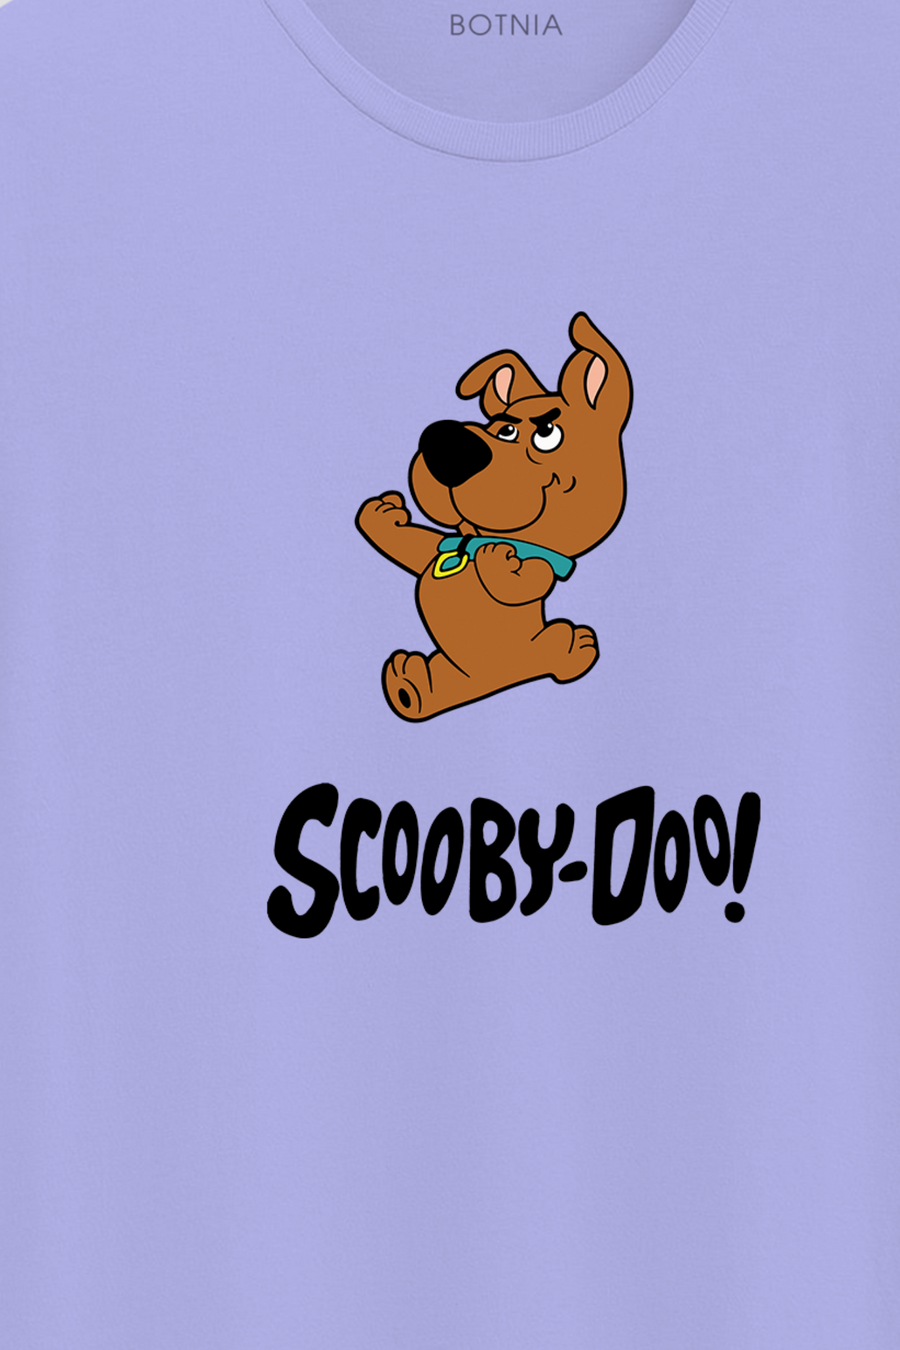 Scooby-Doo! Half sleeve t-shirt - Botnia